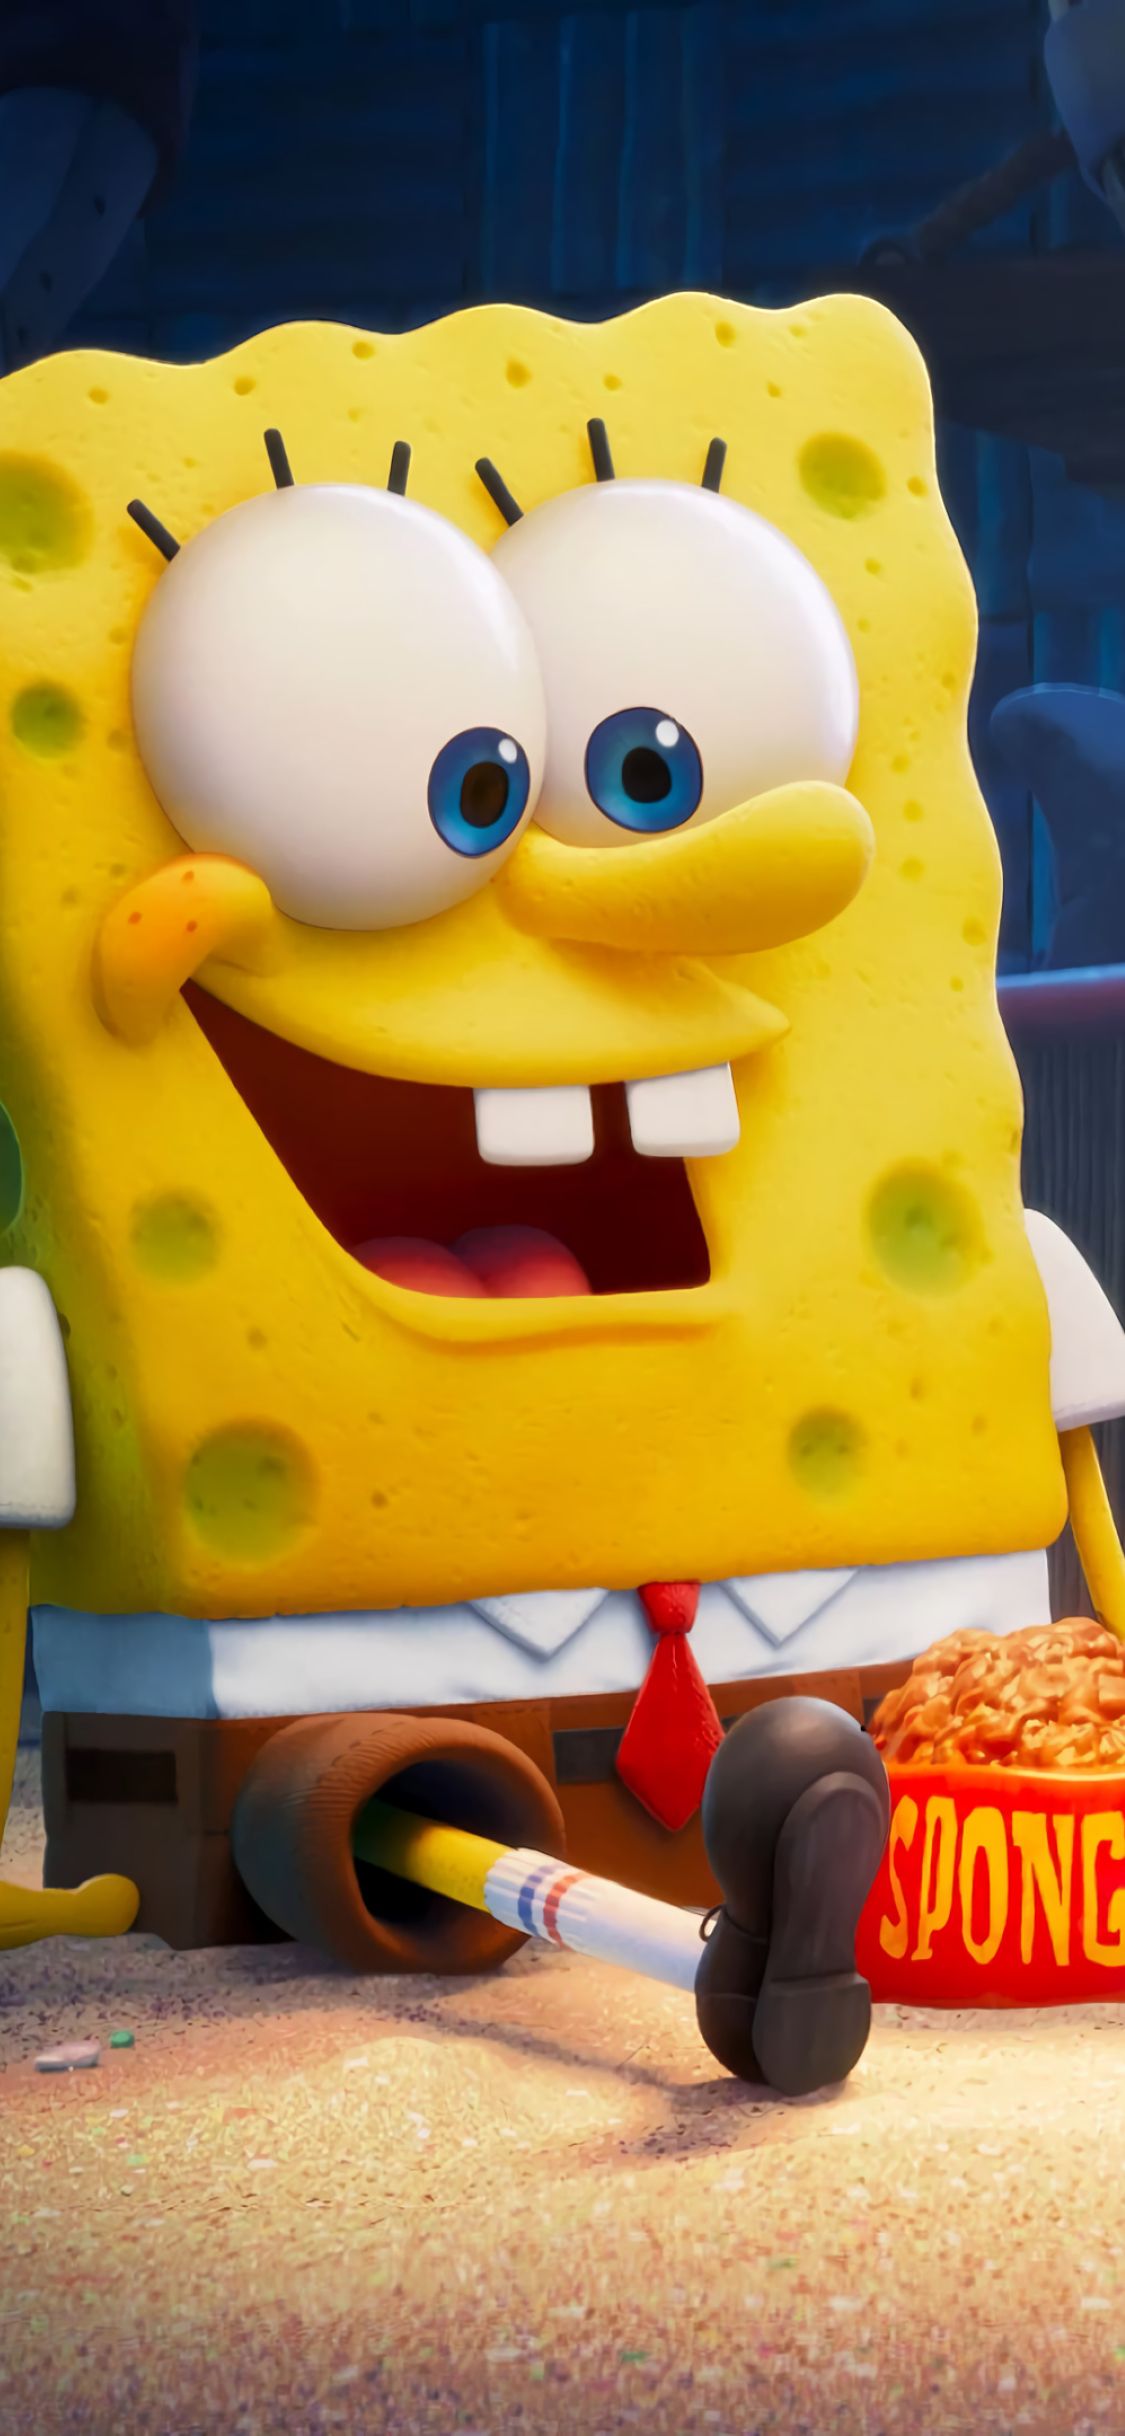 1125x2436 SpongeBob Movie Sponge on the Run Iphone XS,Iphone 10,Iphone X Wallpaper, HD Movies 4K Wallpapers, Image, Photos and Backgrounds